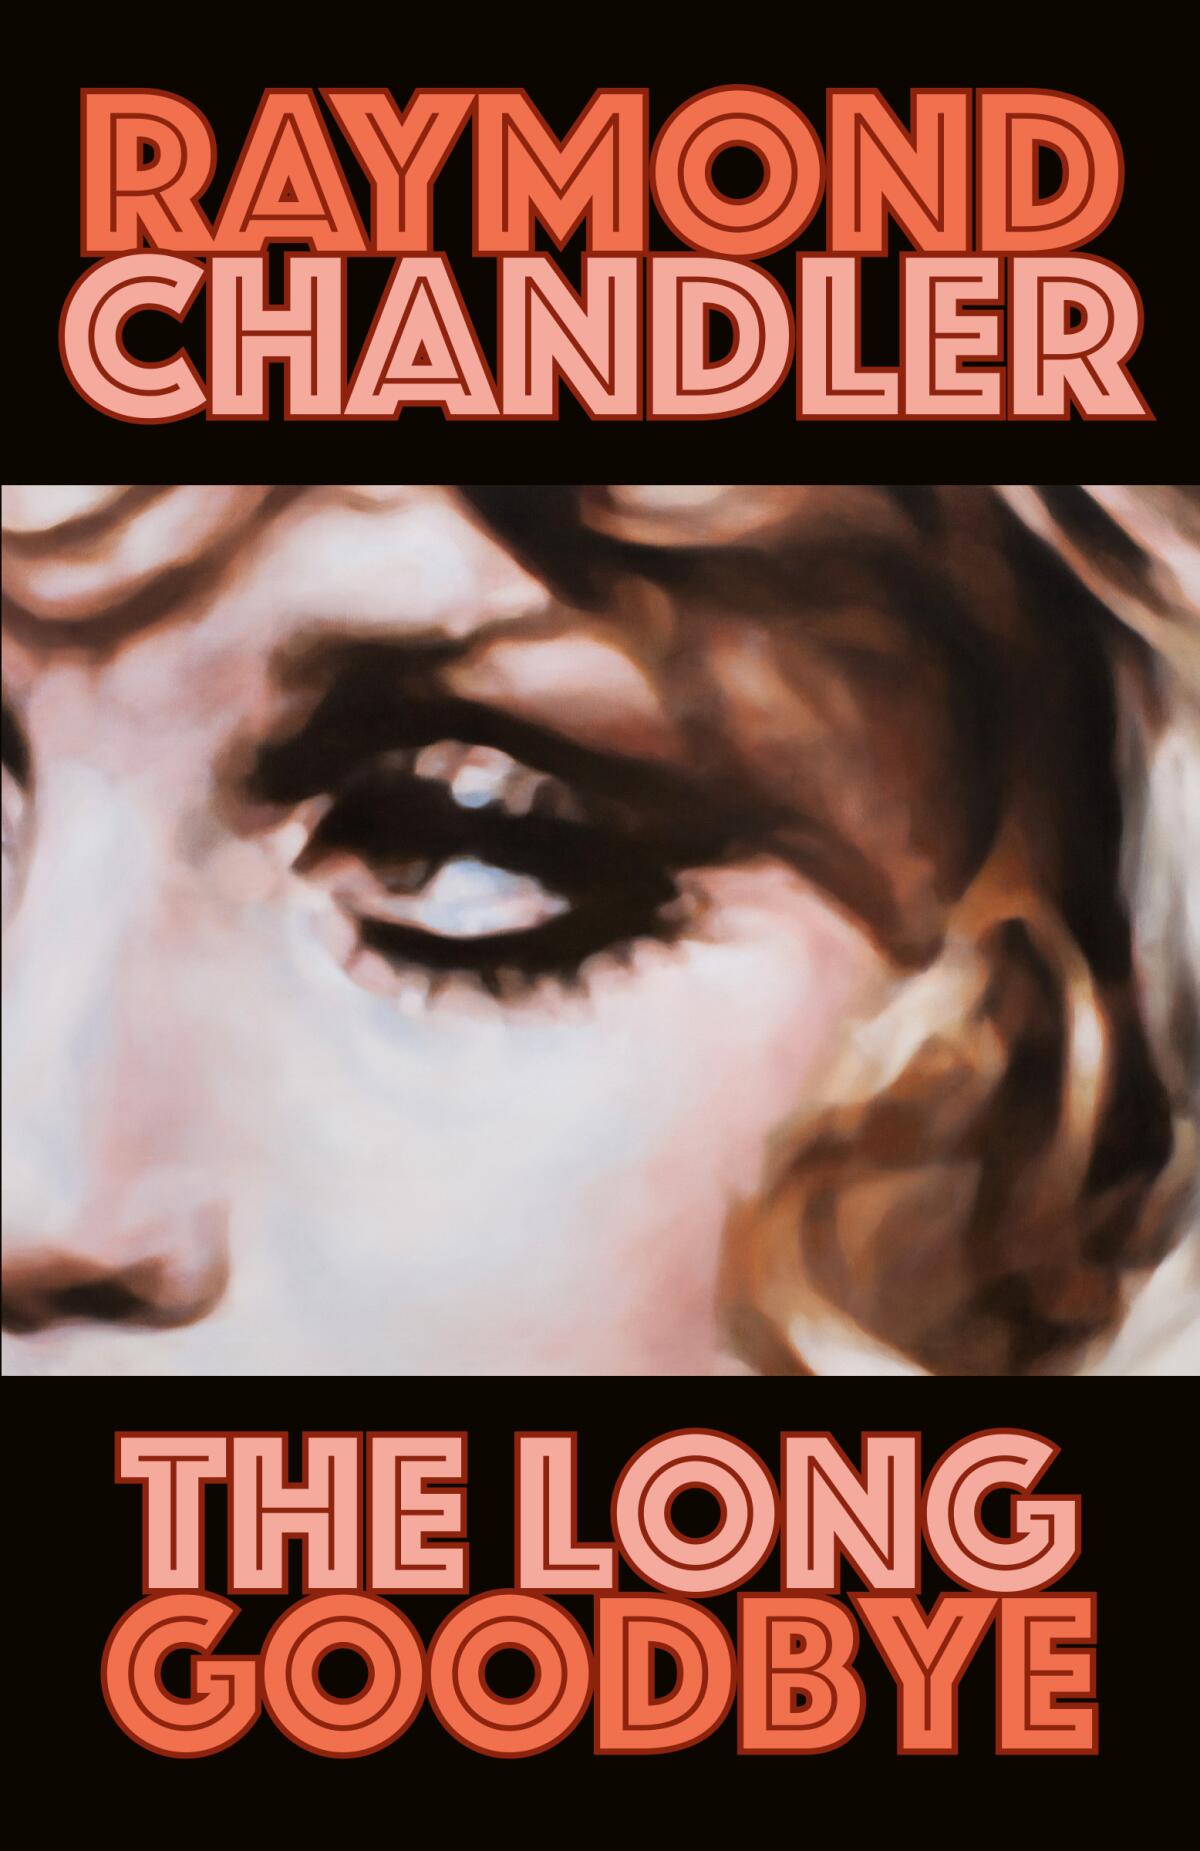 "The Long Goodbye" by Raymond Chandler